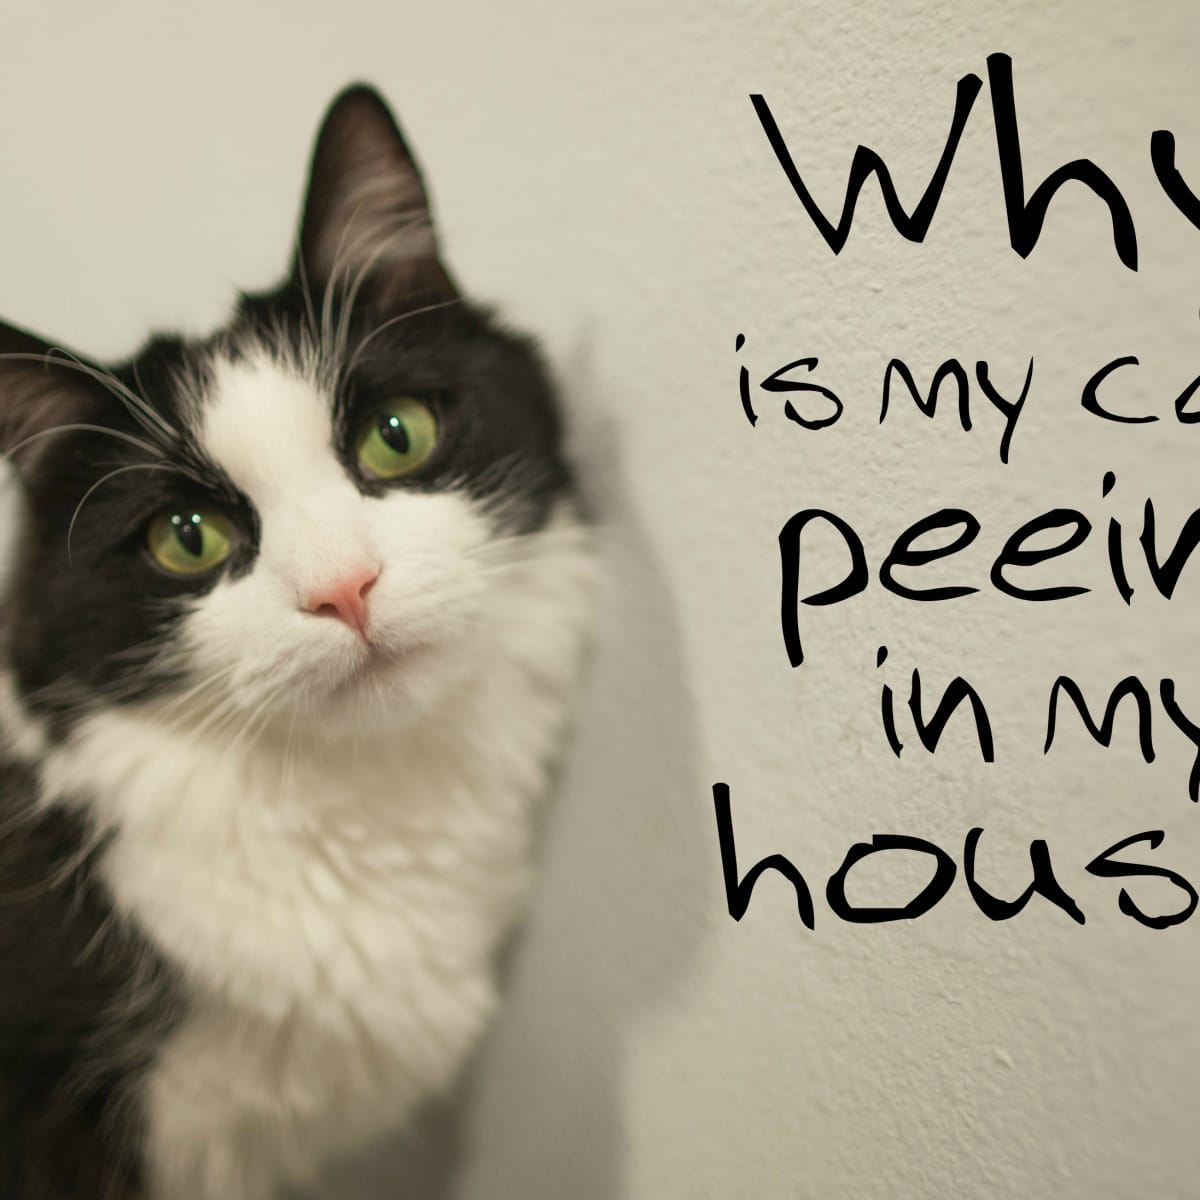 Cat peeing outside on carpet